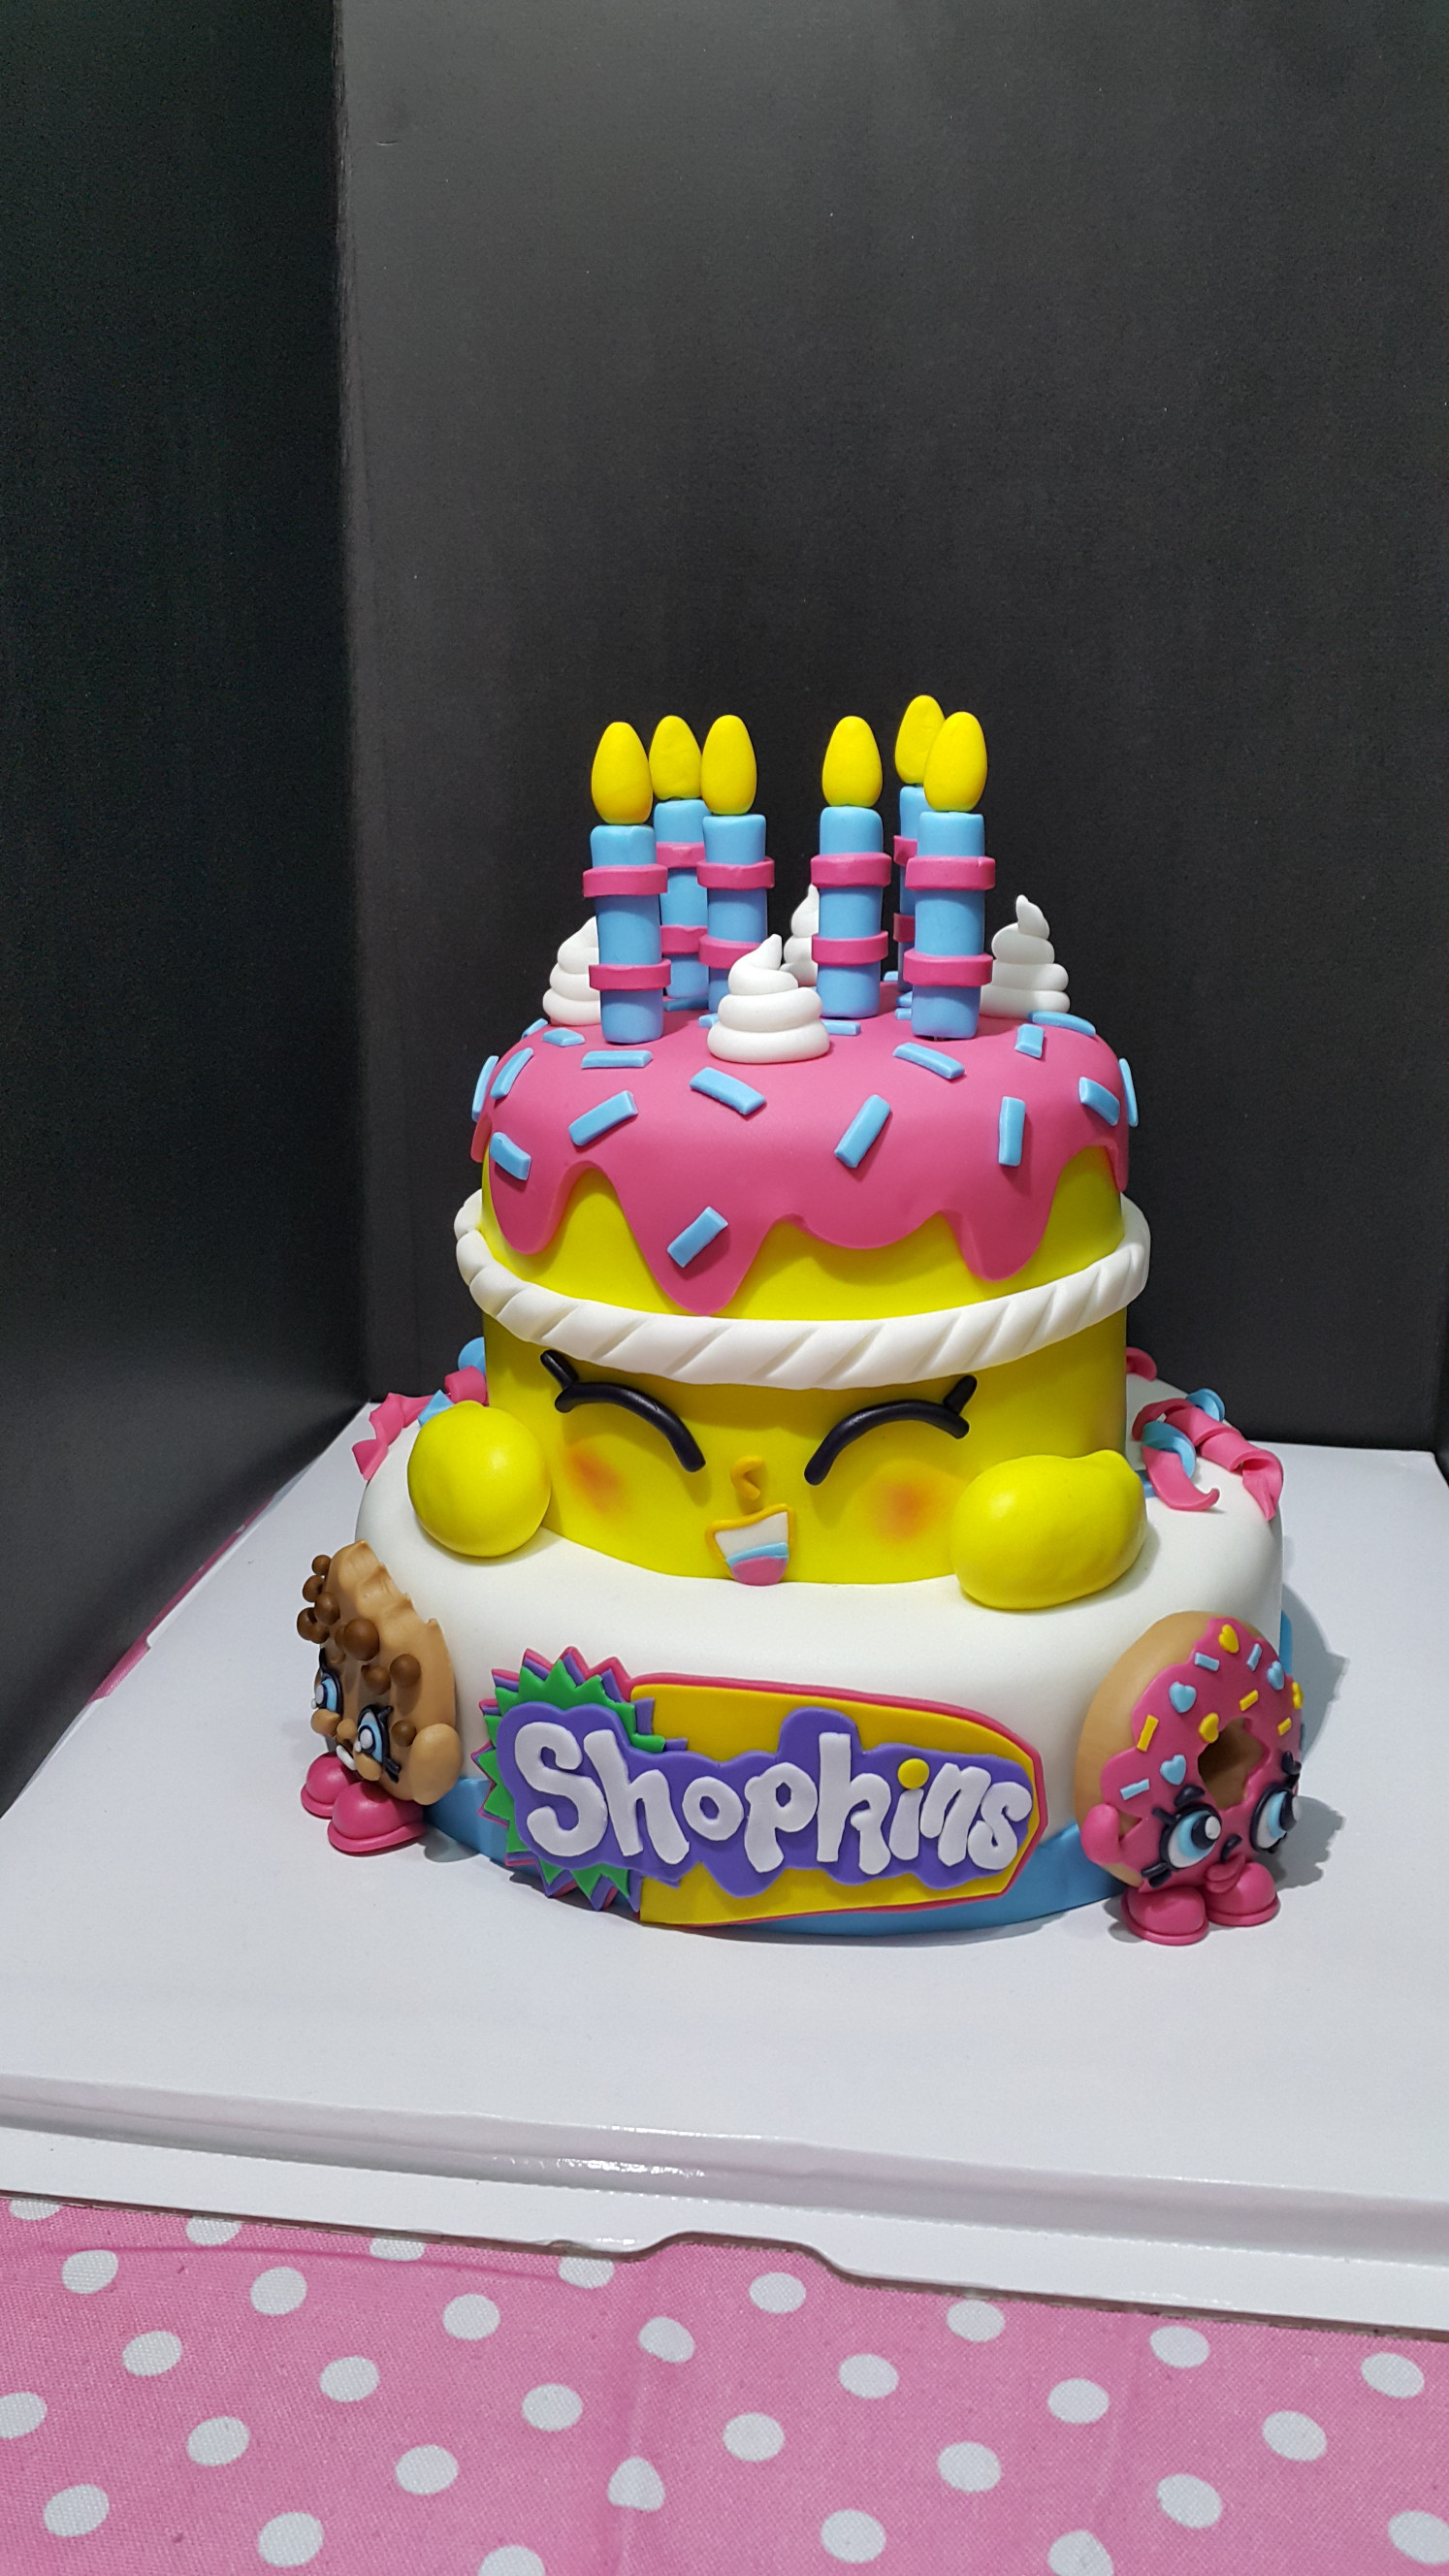 Shopkins Birthday Cake
 Shopkins Cake CakeCentral